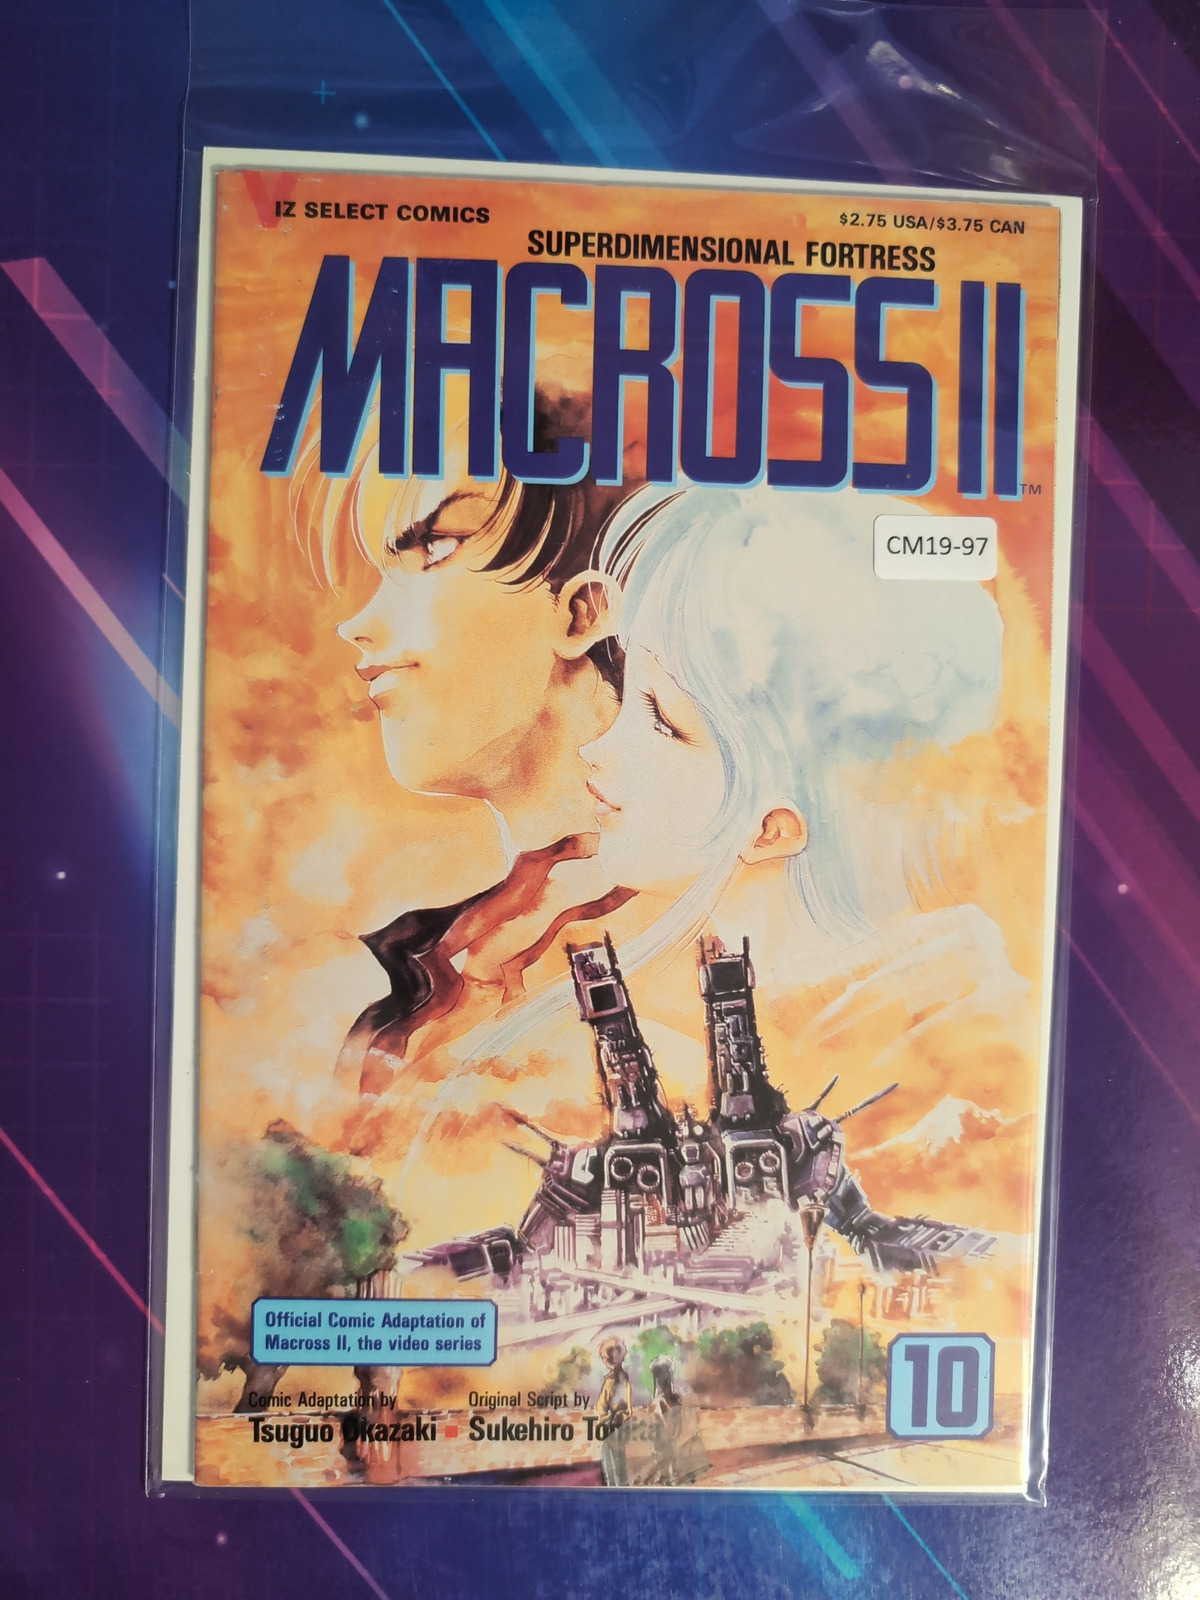 MACROSS II #10 HIGH GRADE VIZ MEDIA COMIC BOOK CM19-97